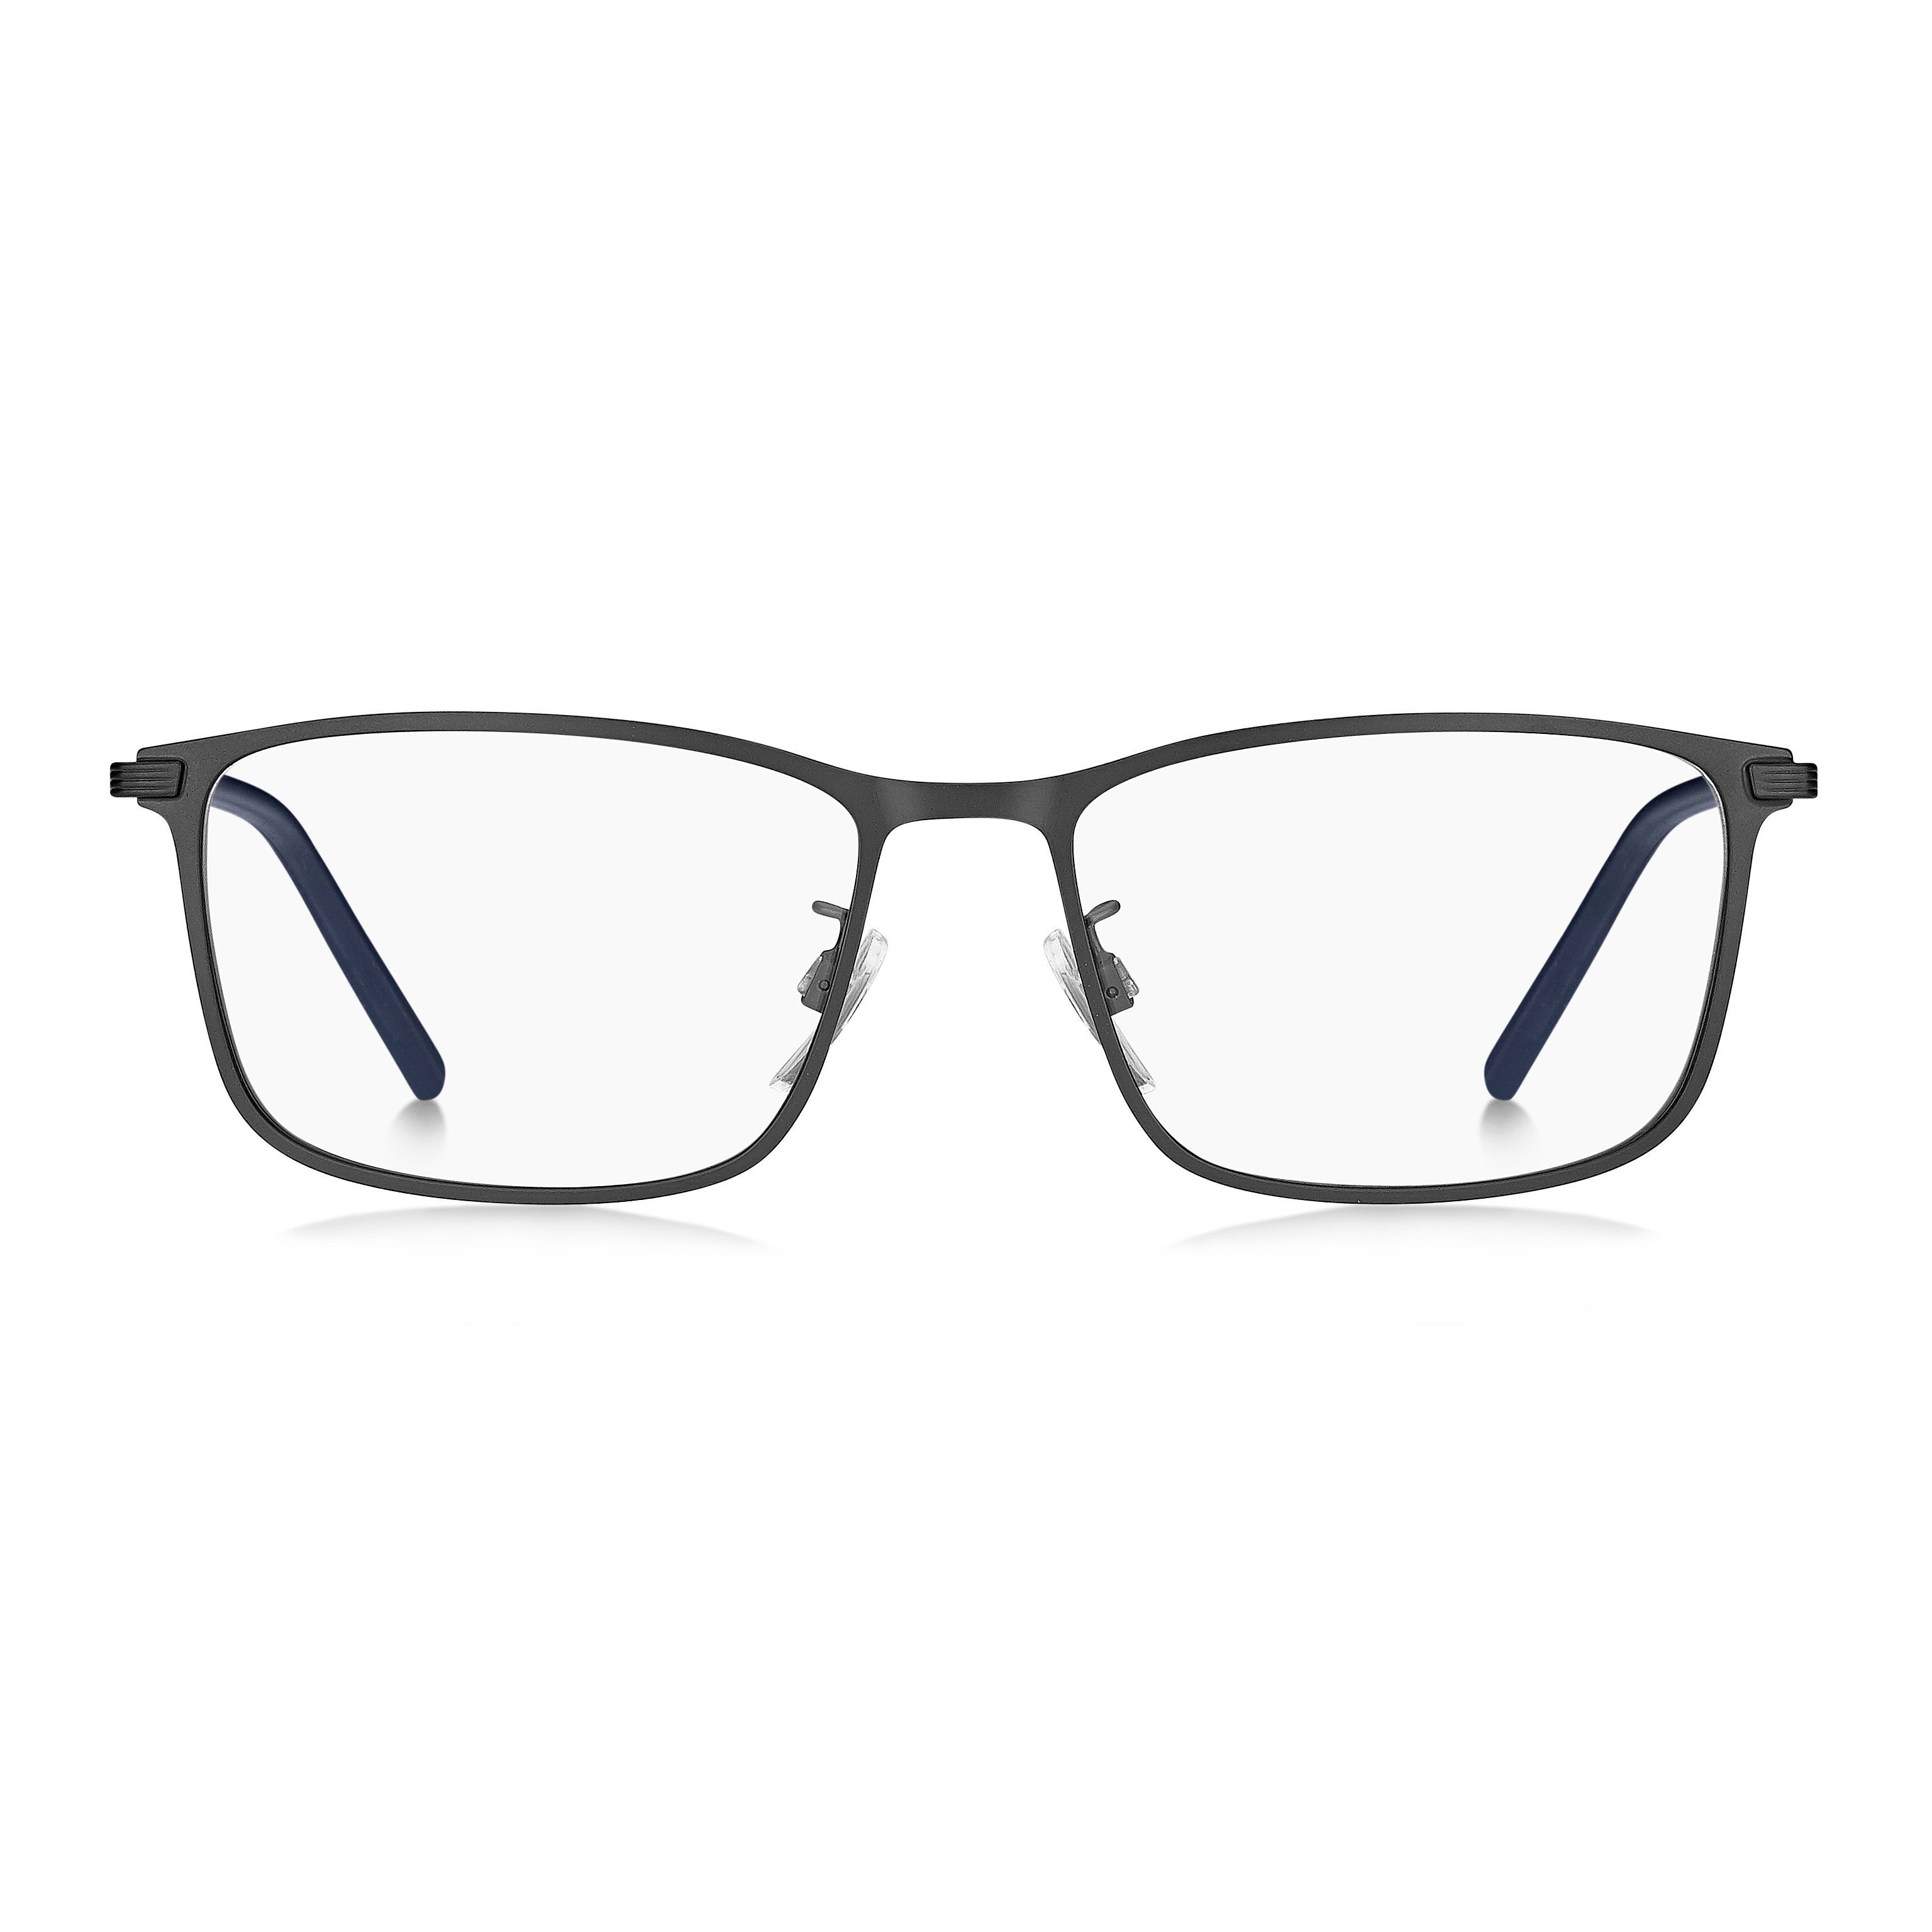 TH 2013 F Square Eyeglasses SVK - size 54